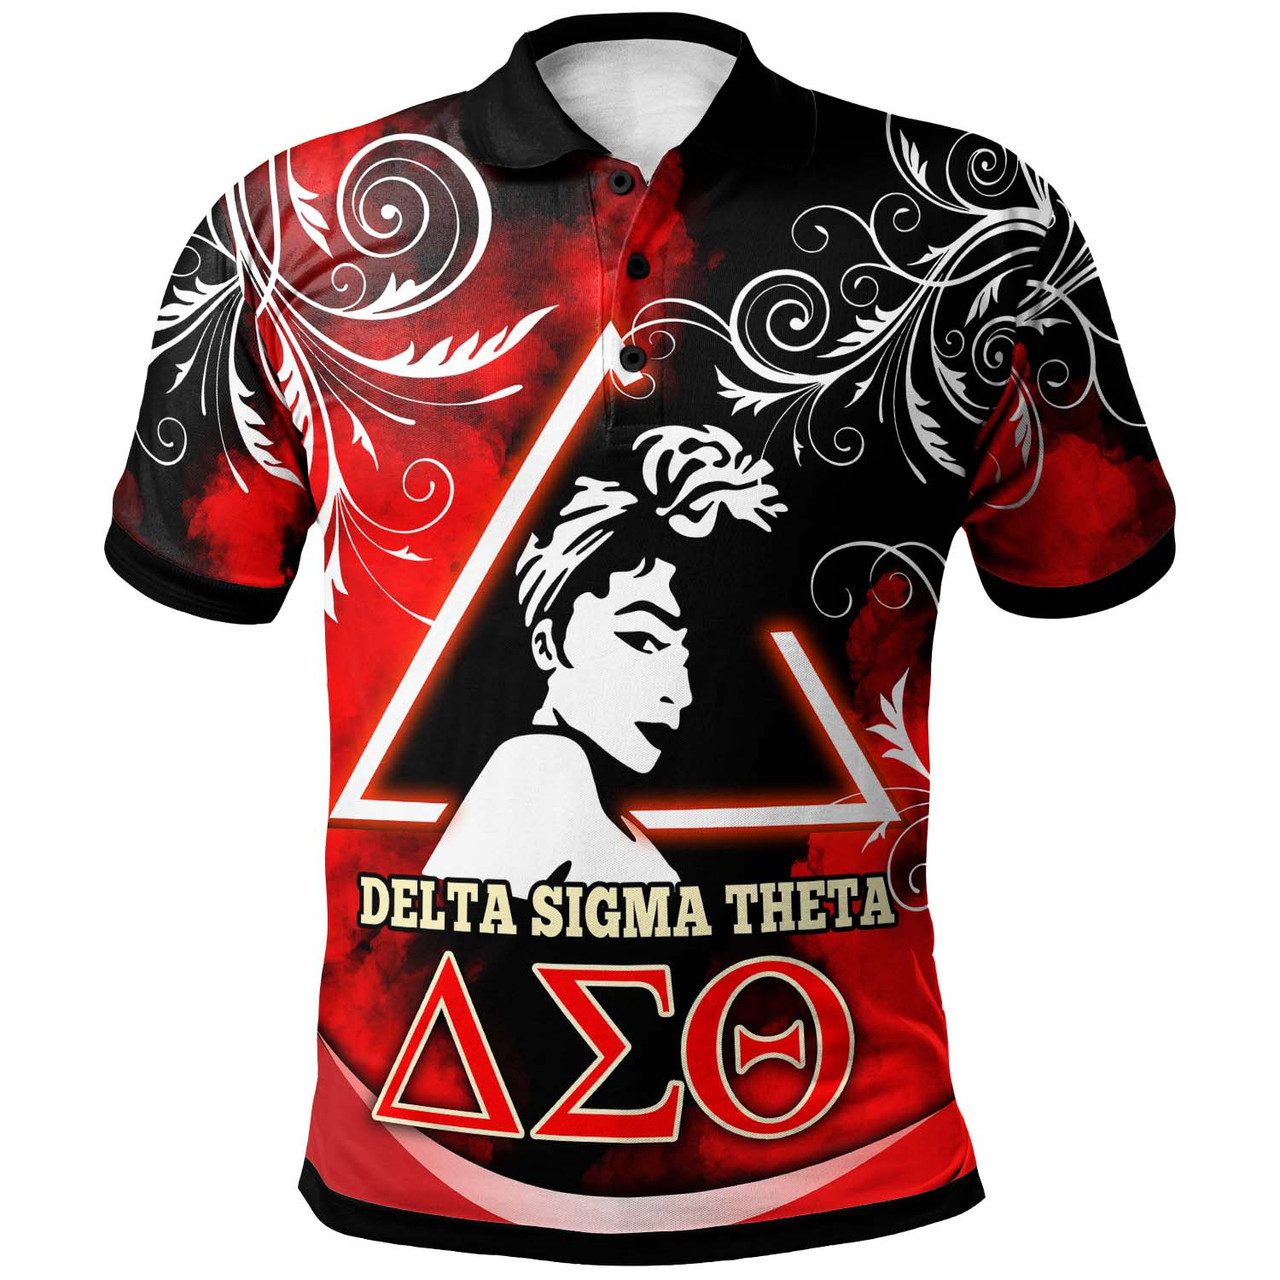 Delta Sigma Theta Polo Shirt – Sorority Delta Sigma Theta Pyramid Light and Quotes Vibes Polo Shirt